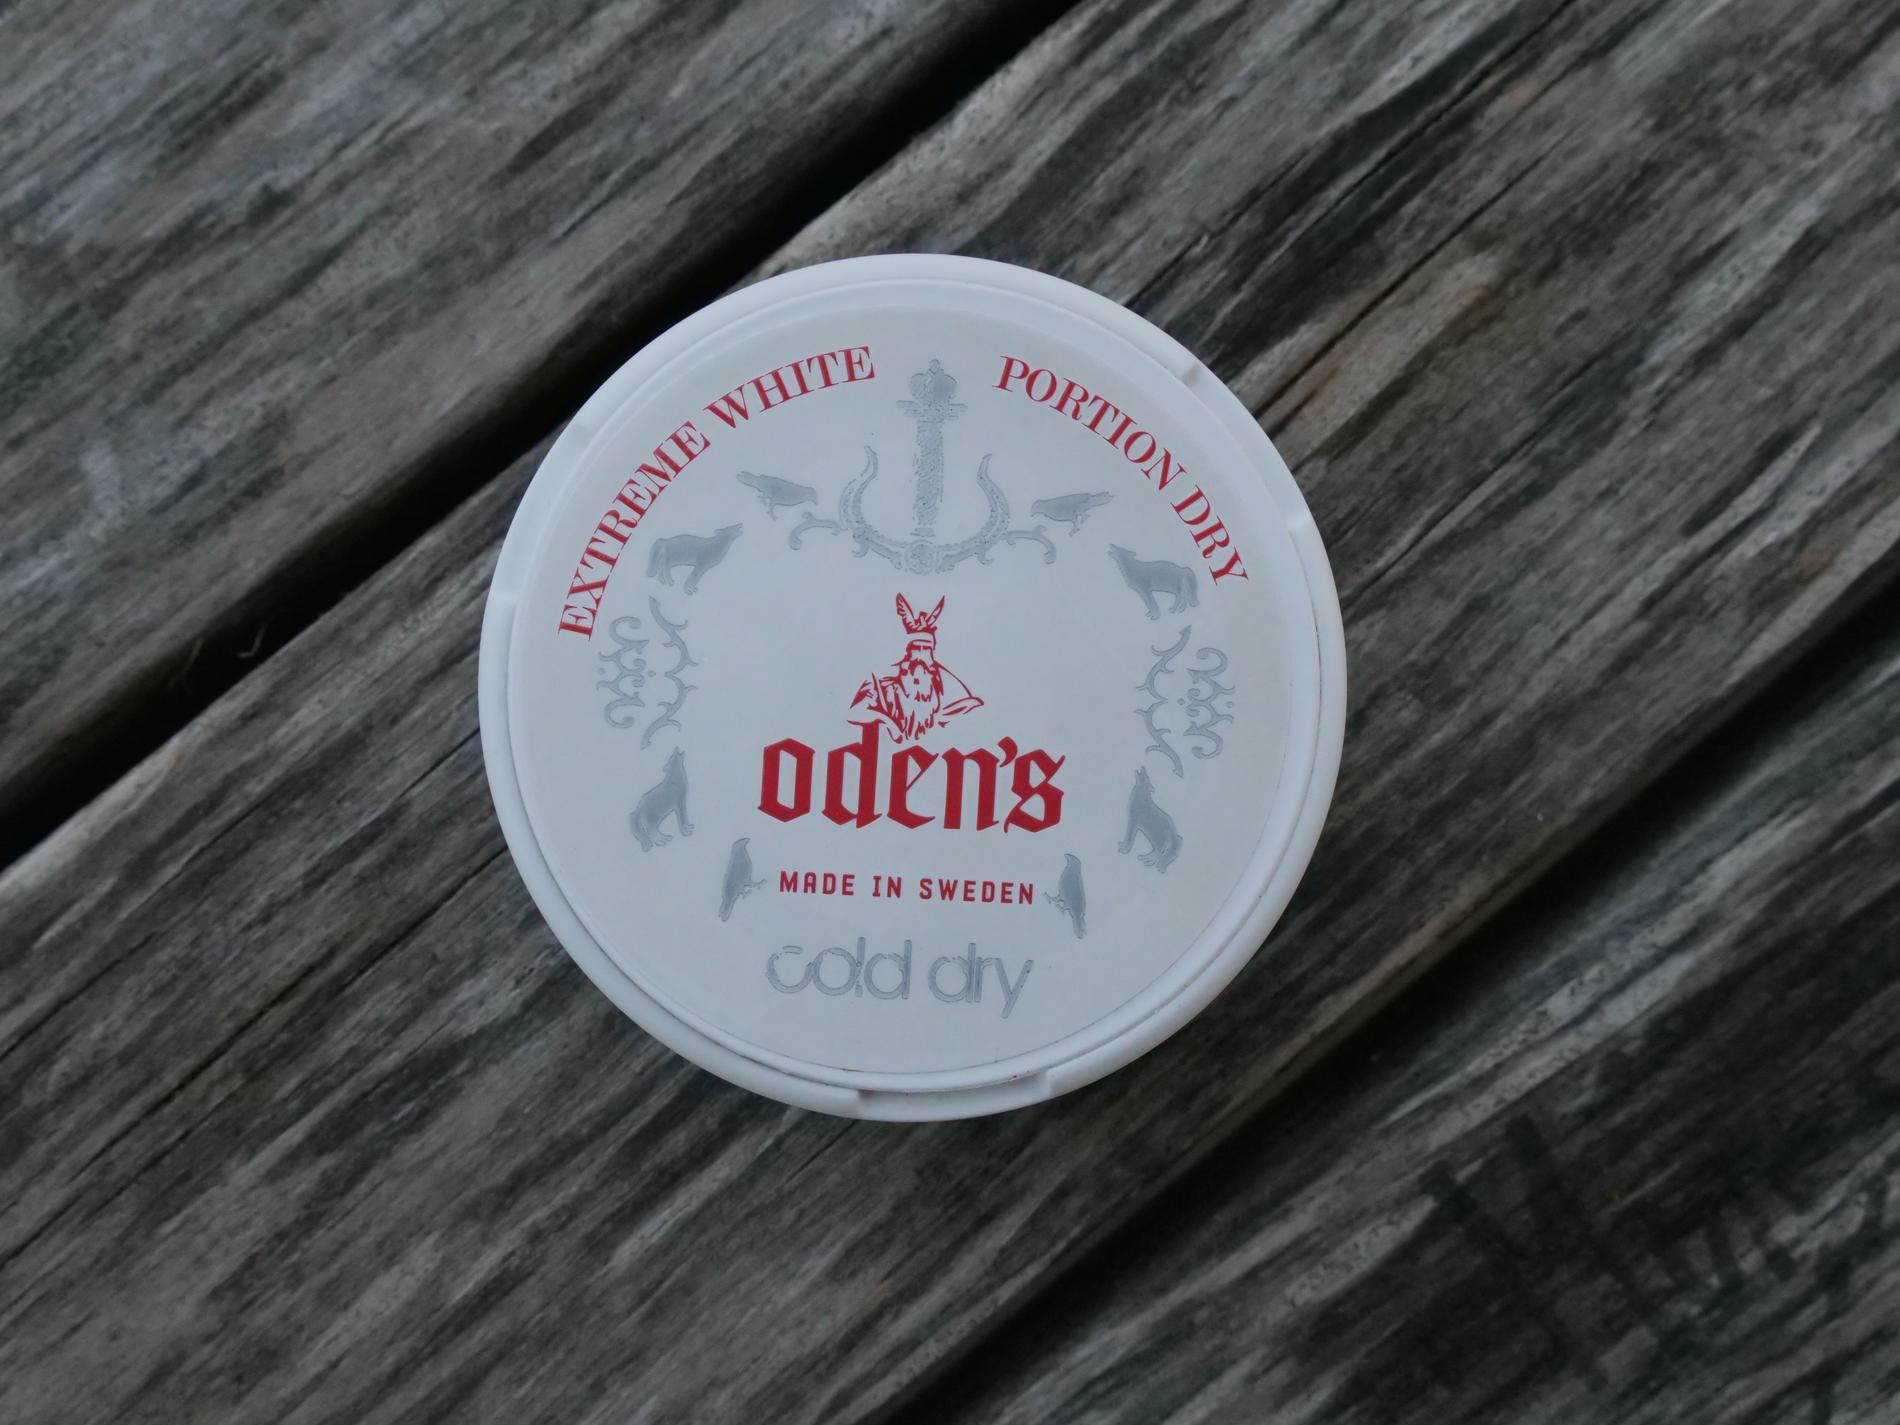 Odens ”Extreme White Portion Dry”, har mintsmak, och bränner under läppen.